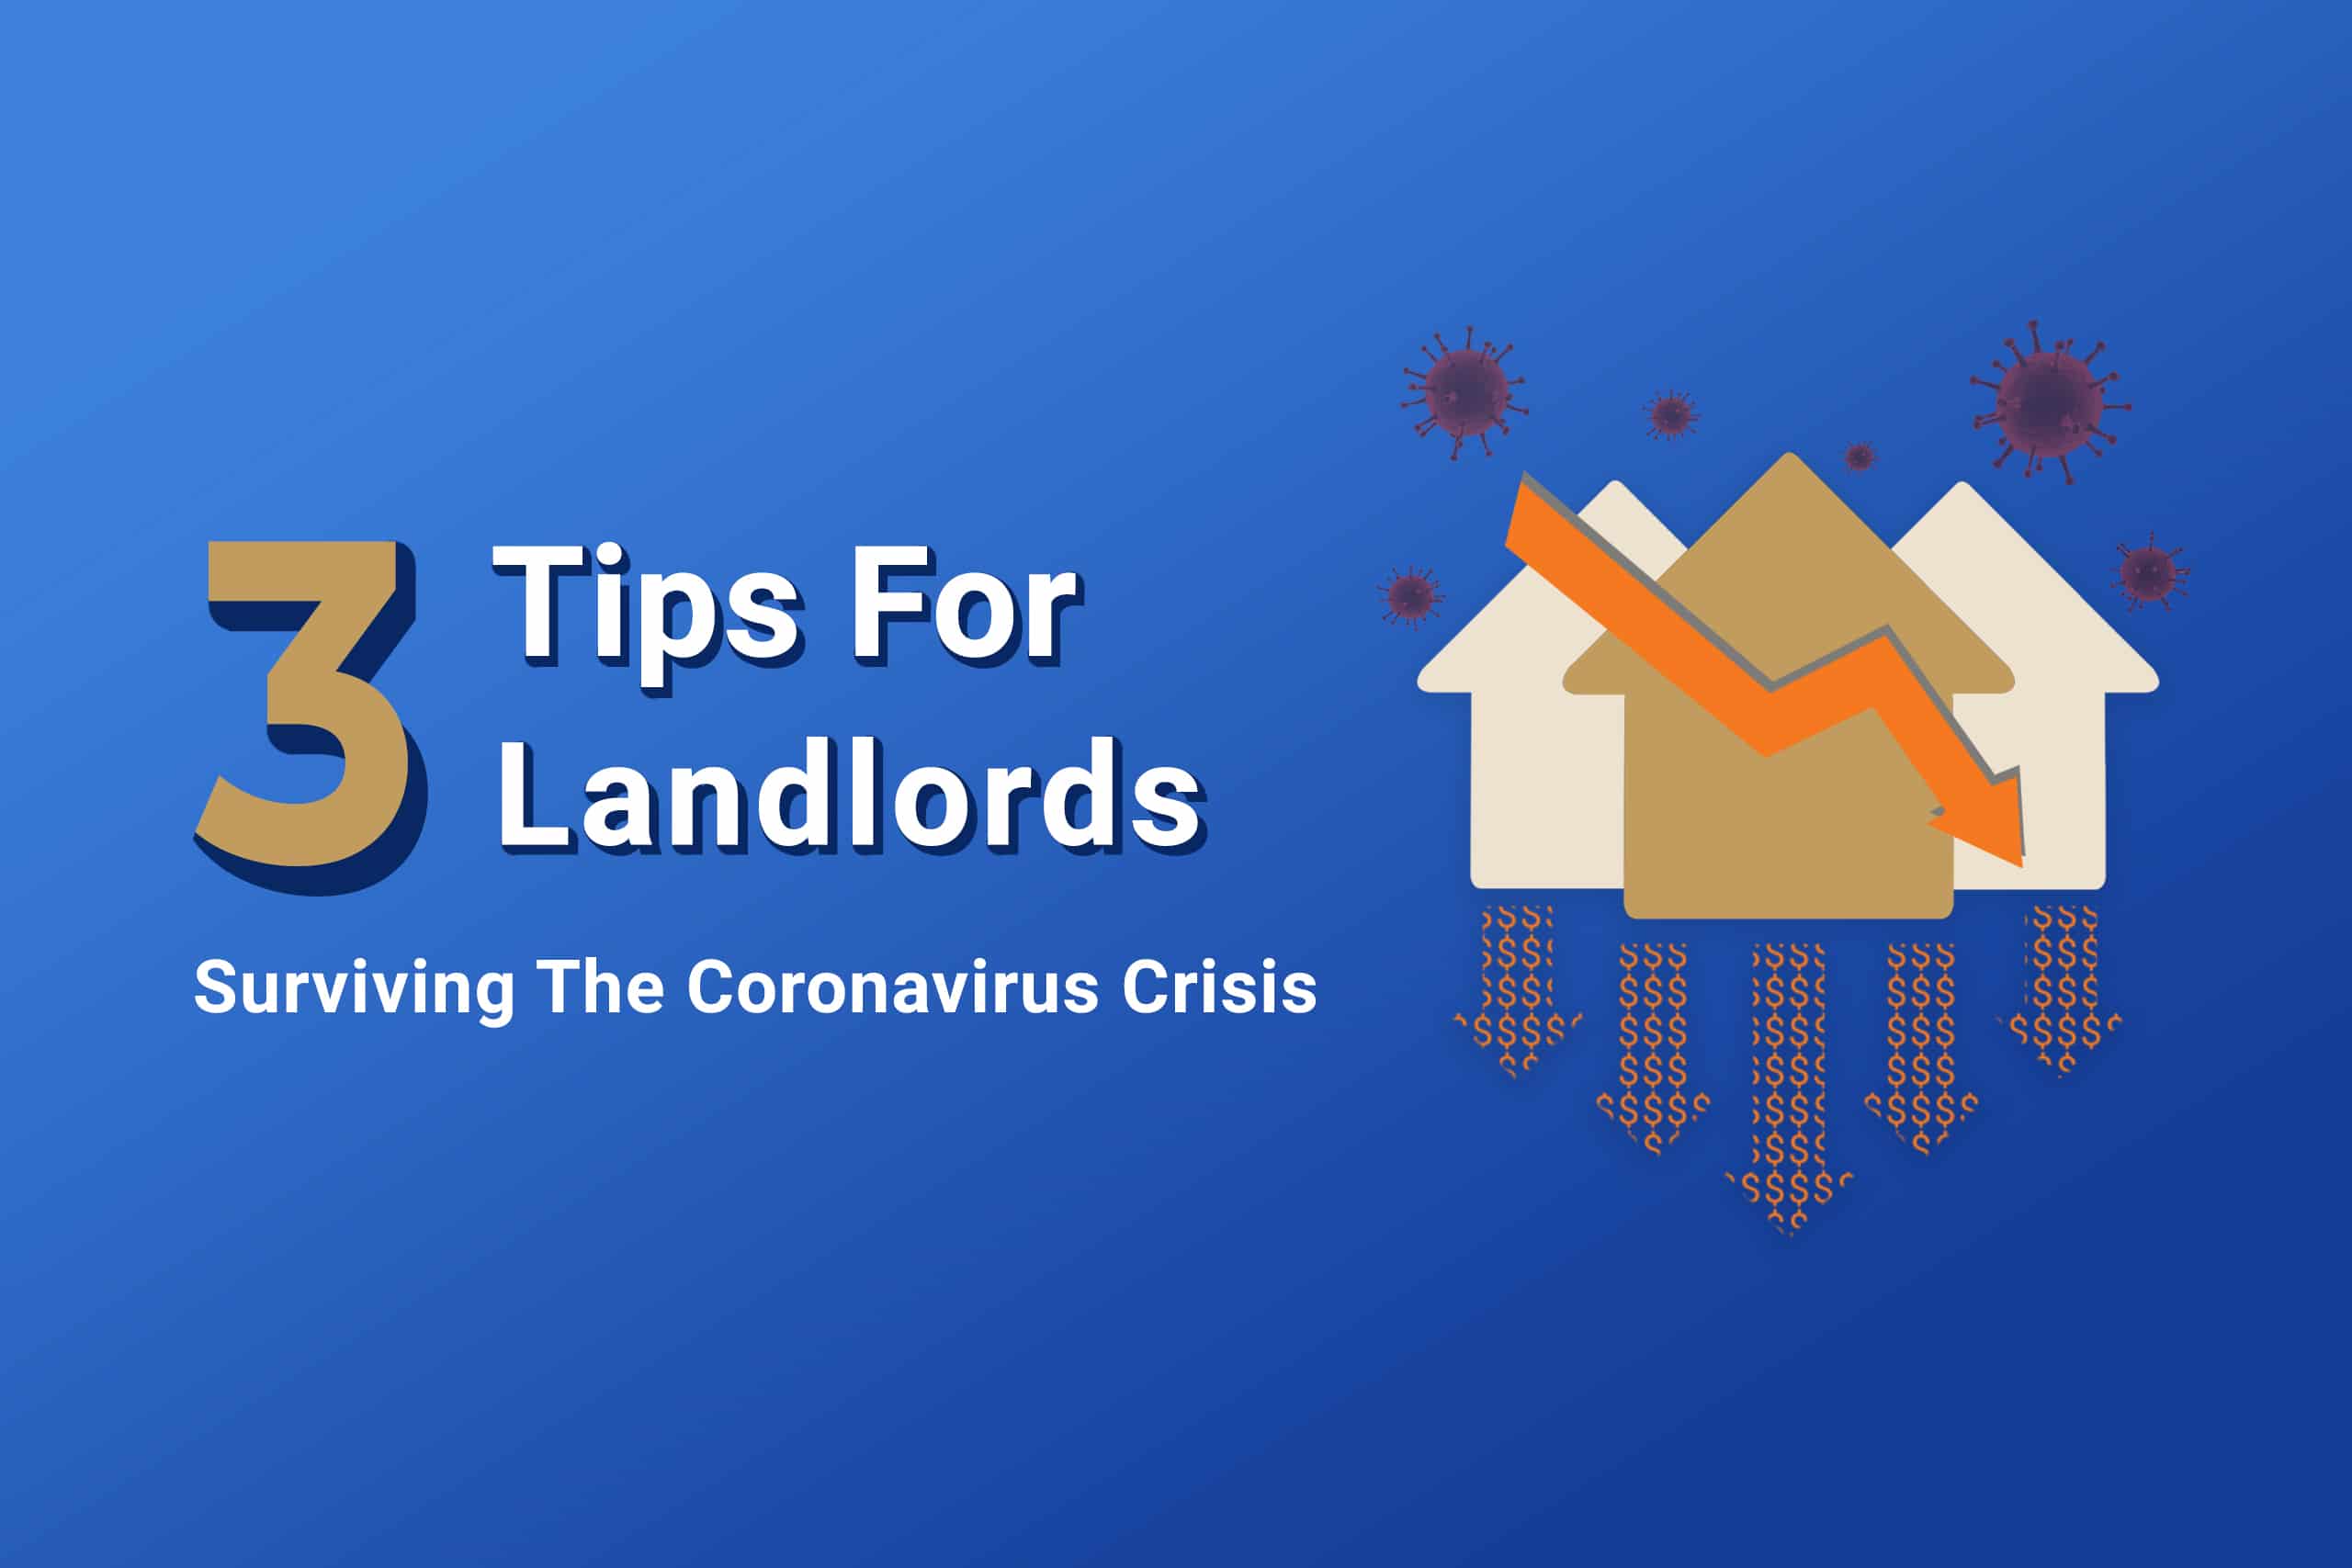 Landlord tips for surviving the coronavirus crisis